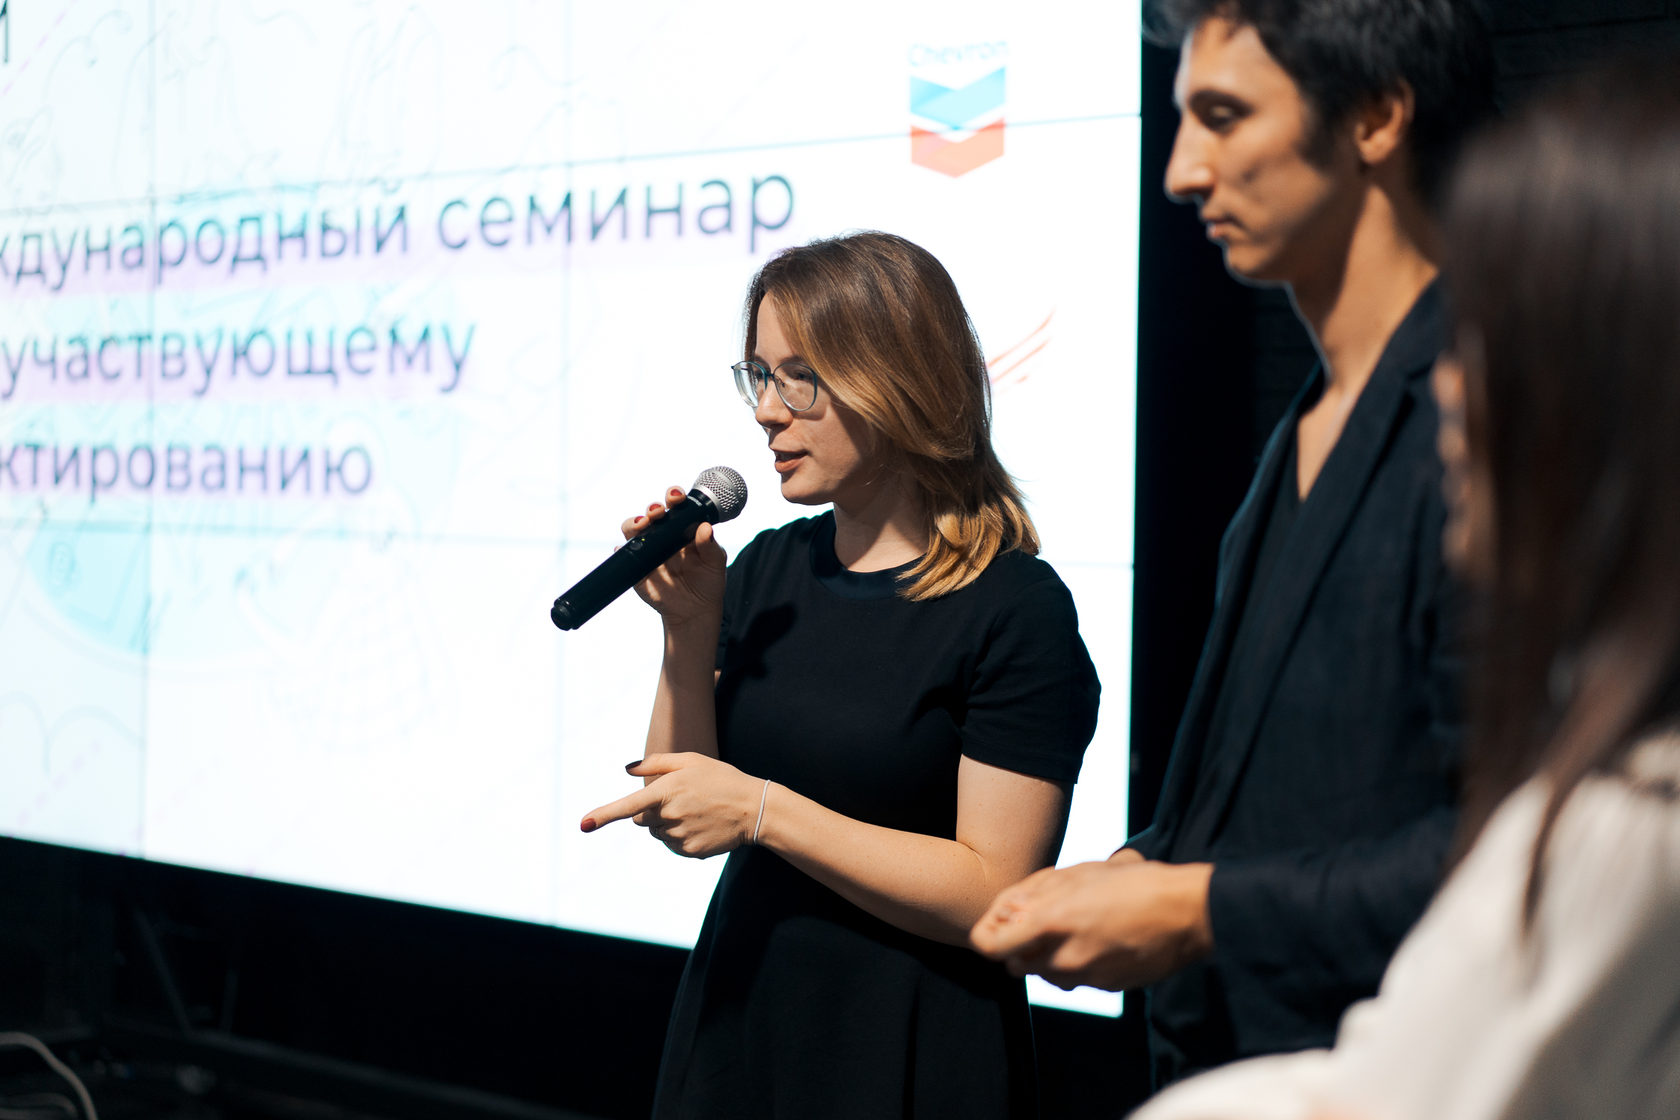 Для обслуживания международного семинара 12000 рублей